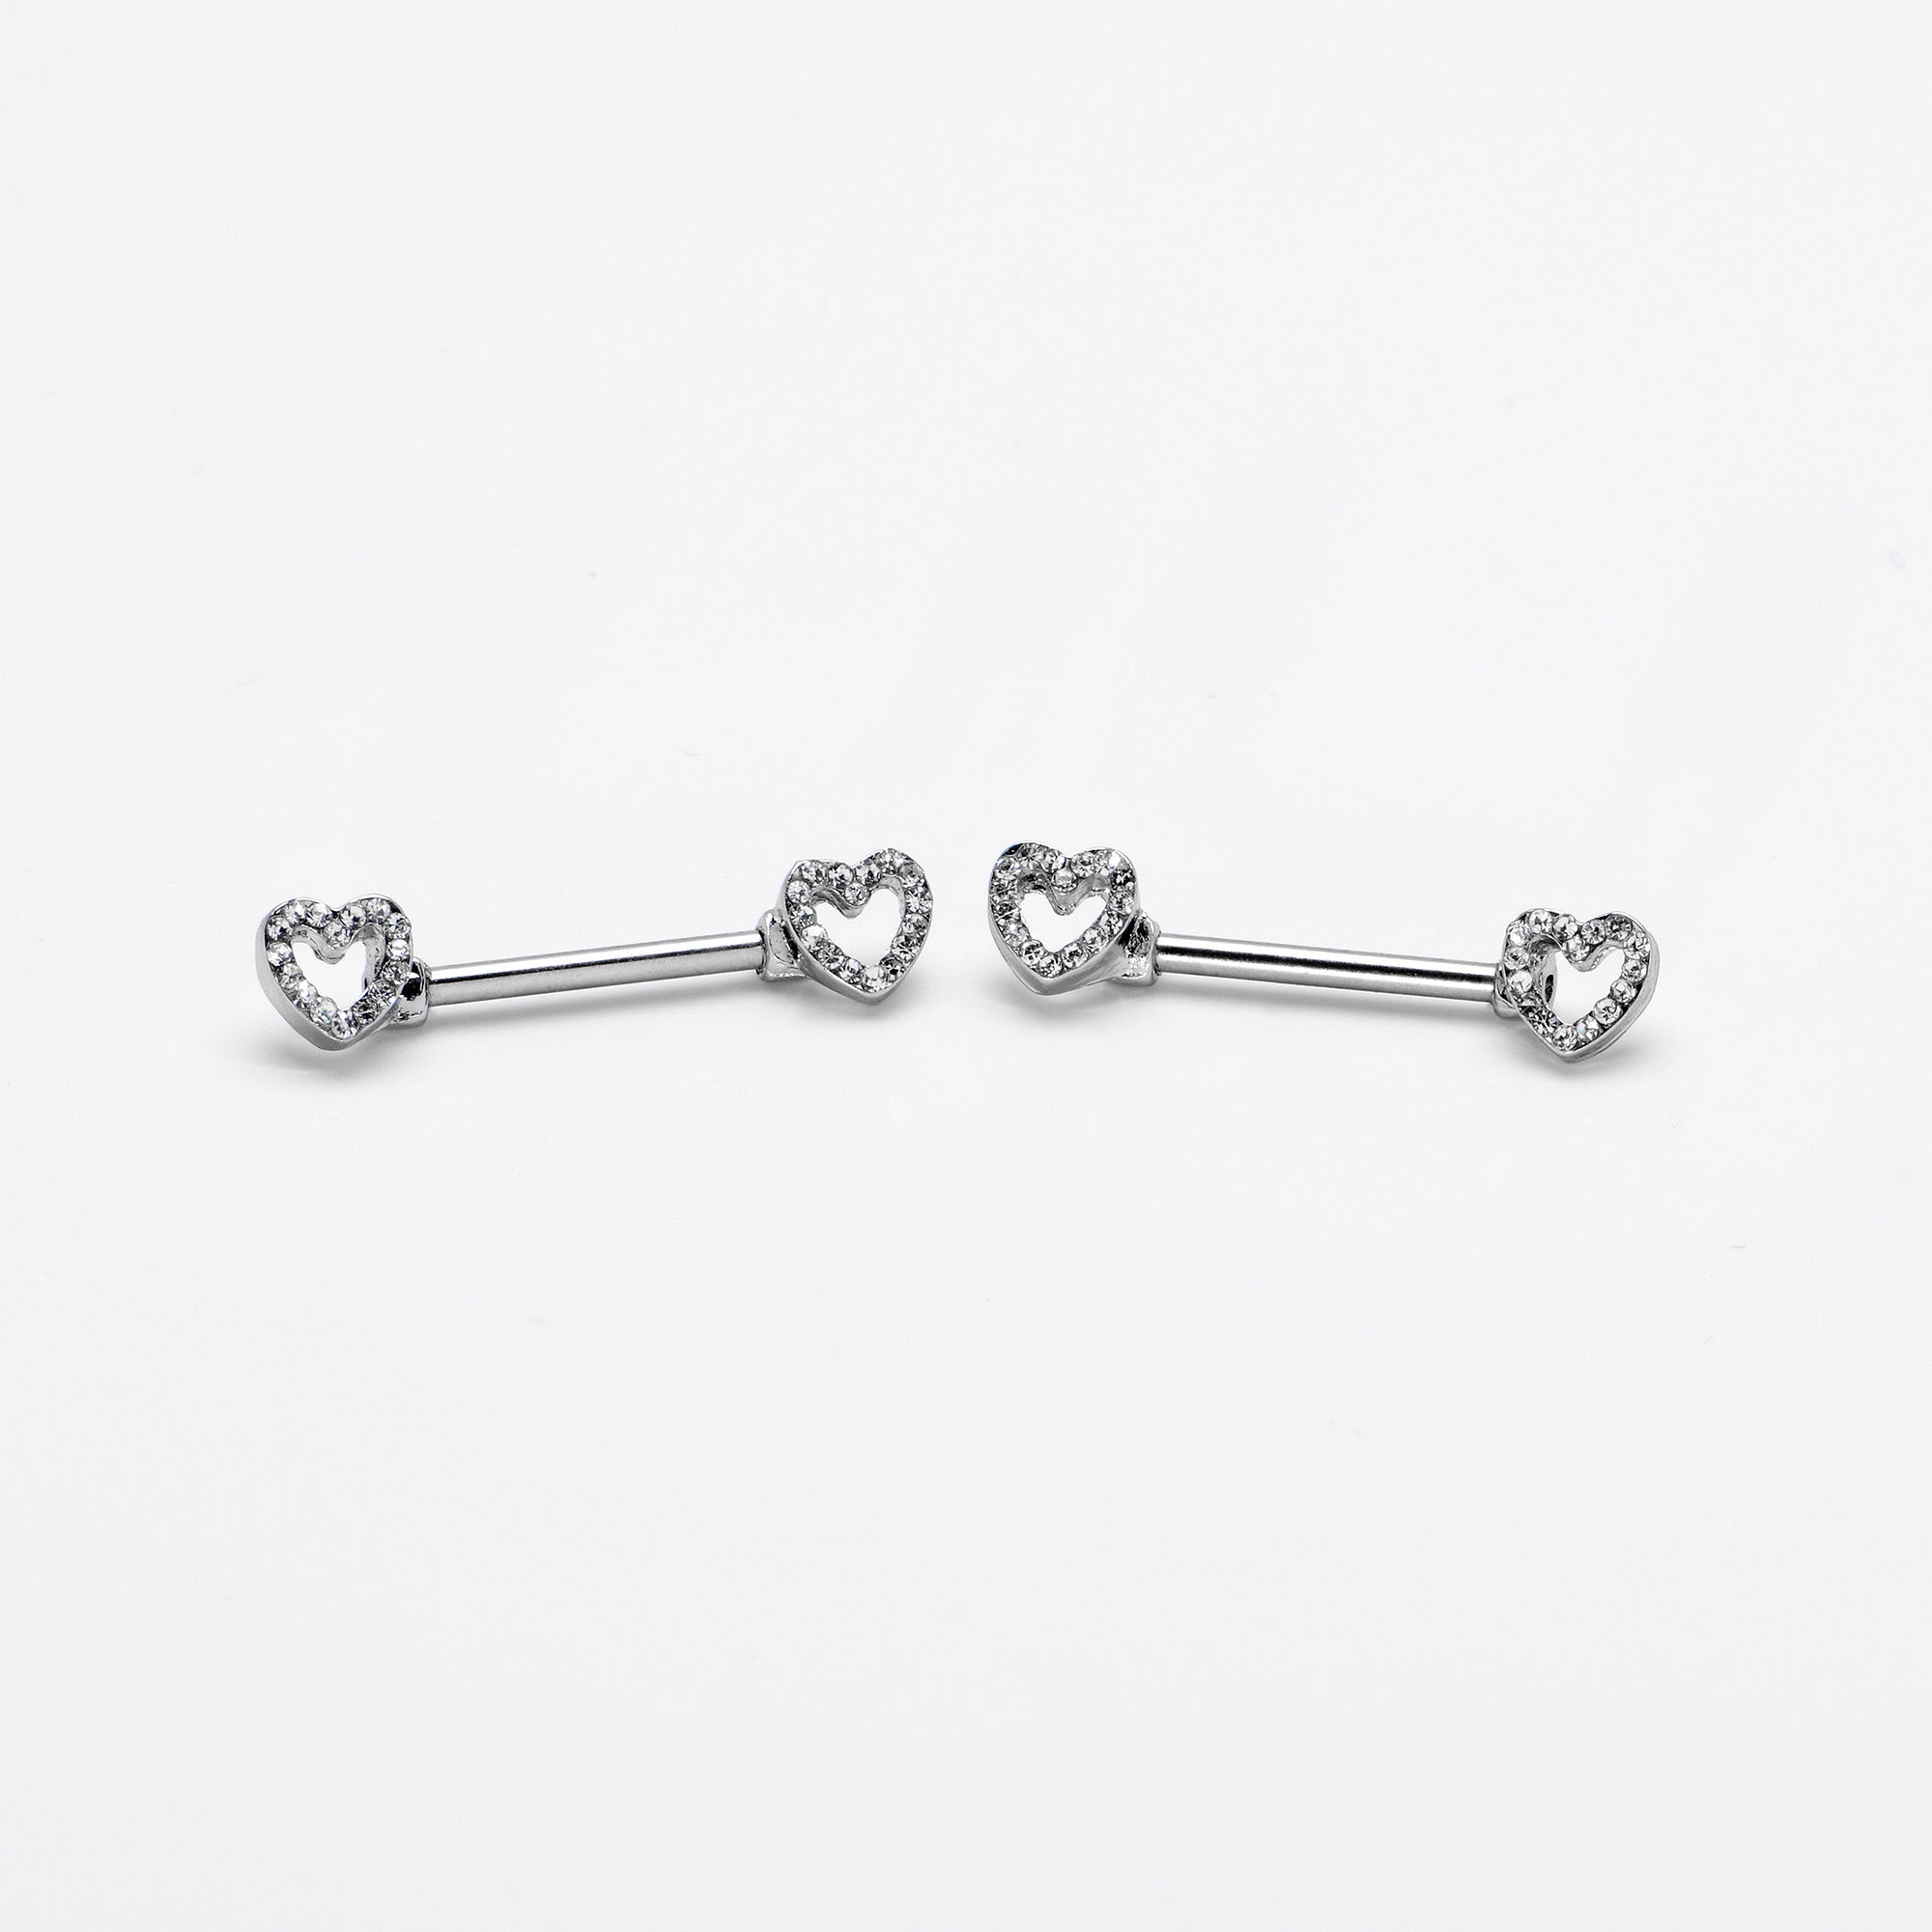 14 Gauge 9/16 Clear Gem Open Heart Valentine Barbell Nipple Ring Set